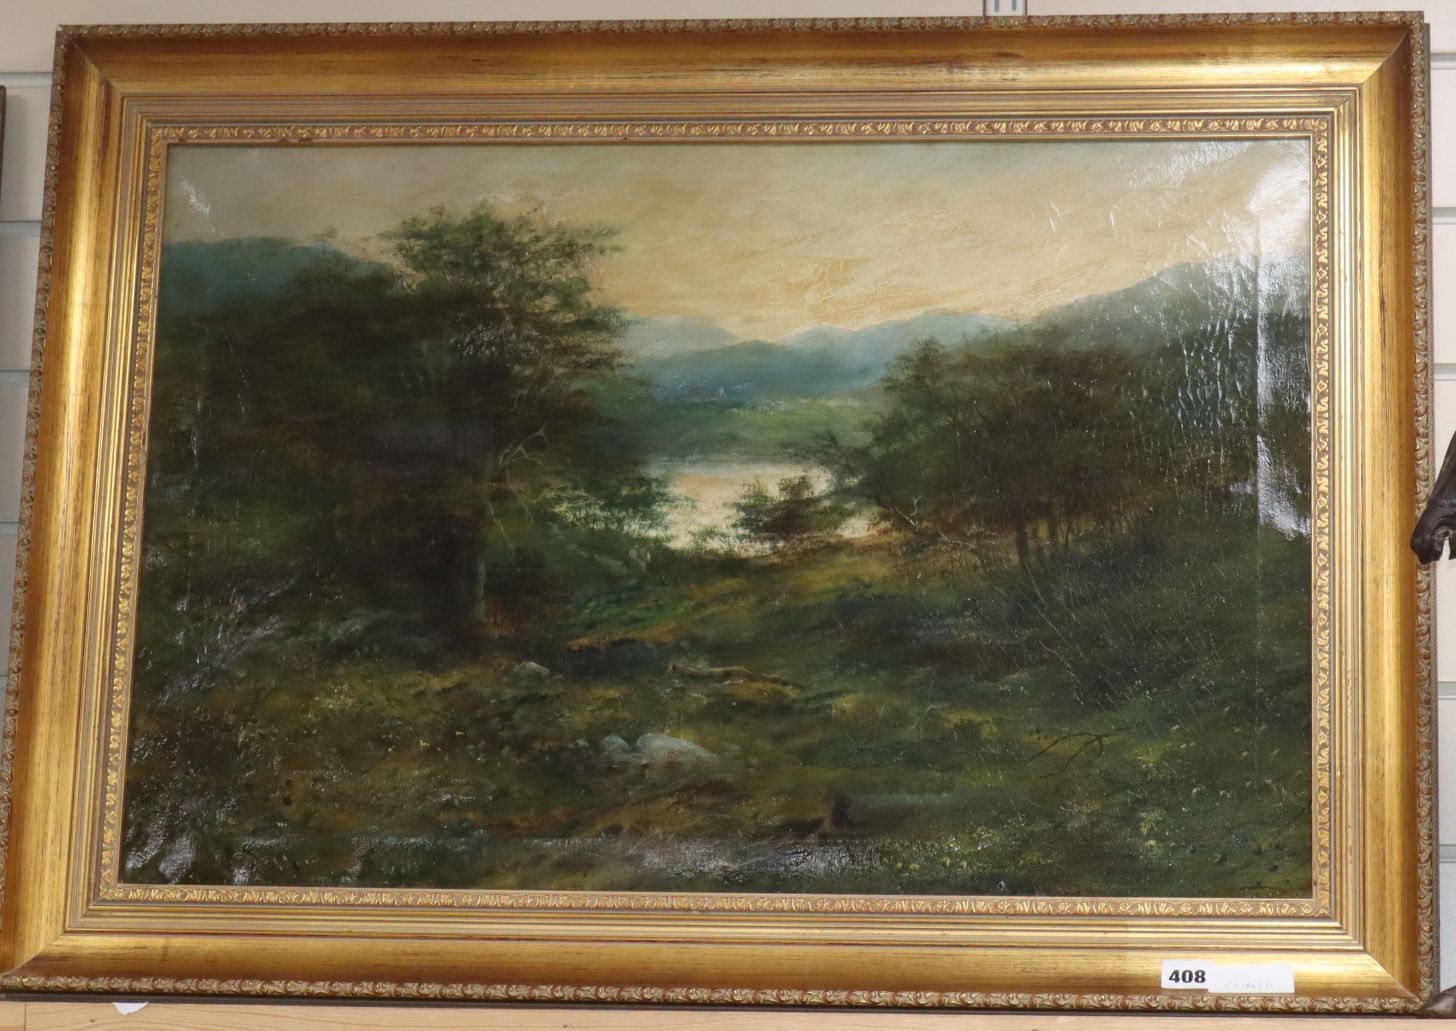 English School c.1900, oil on canvas, Lake scene, 48 x 74cm